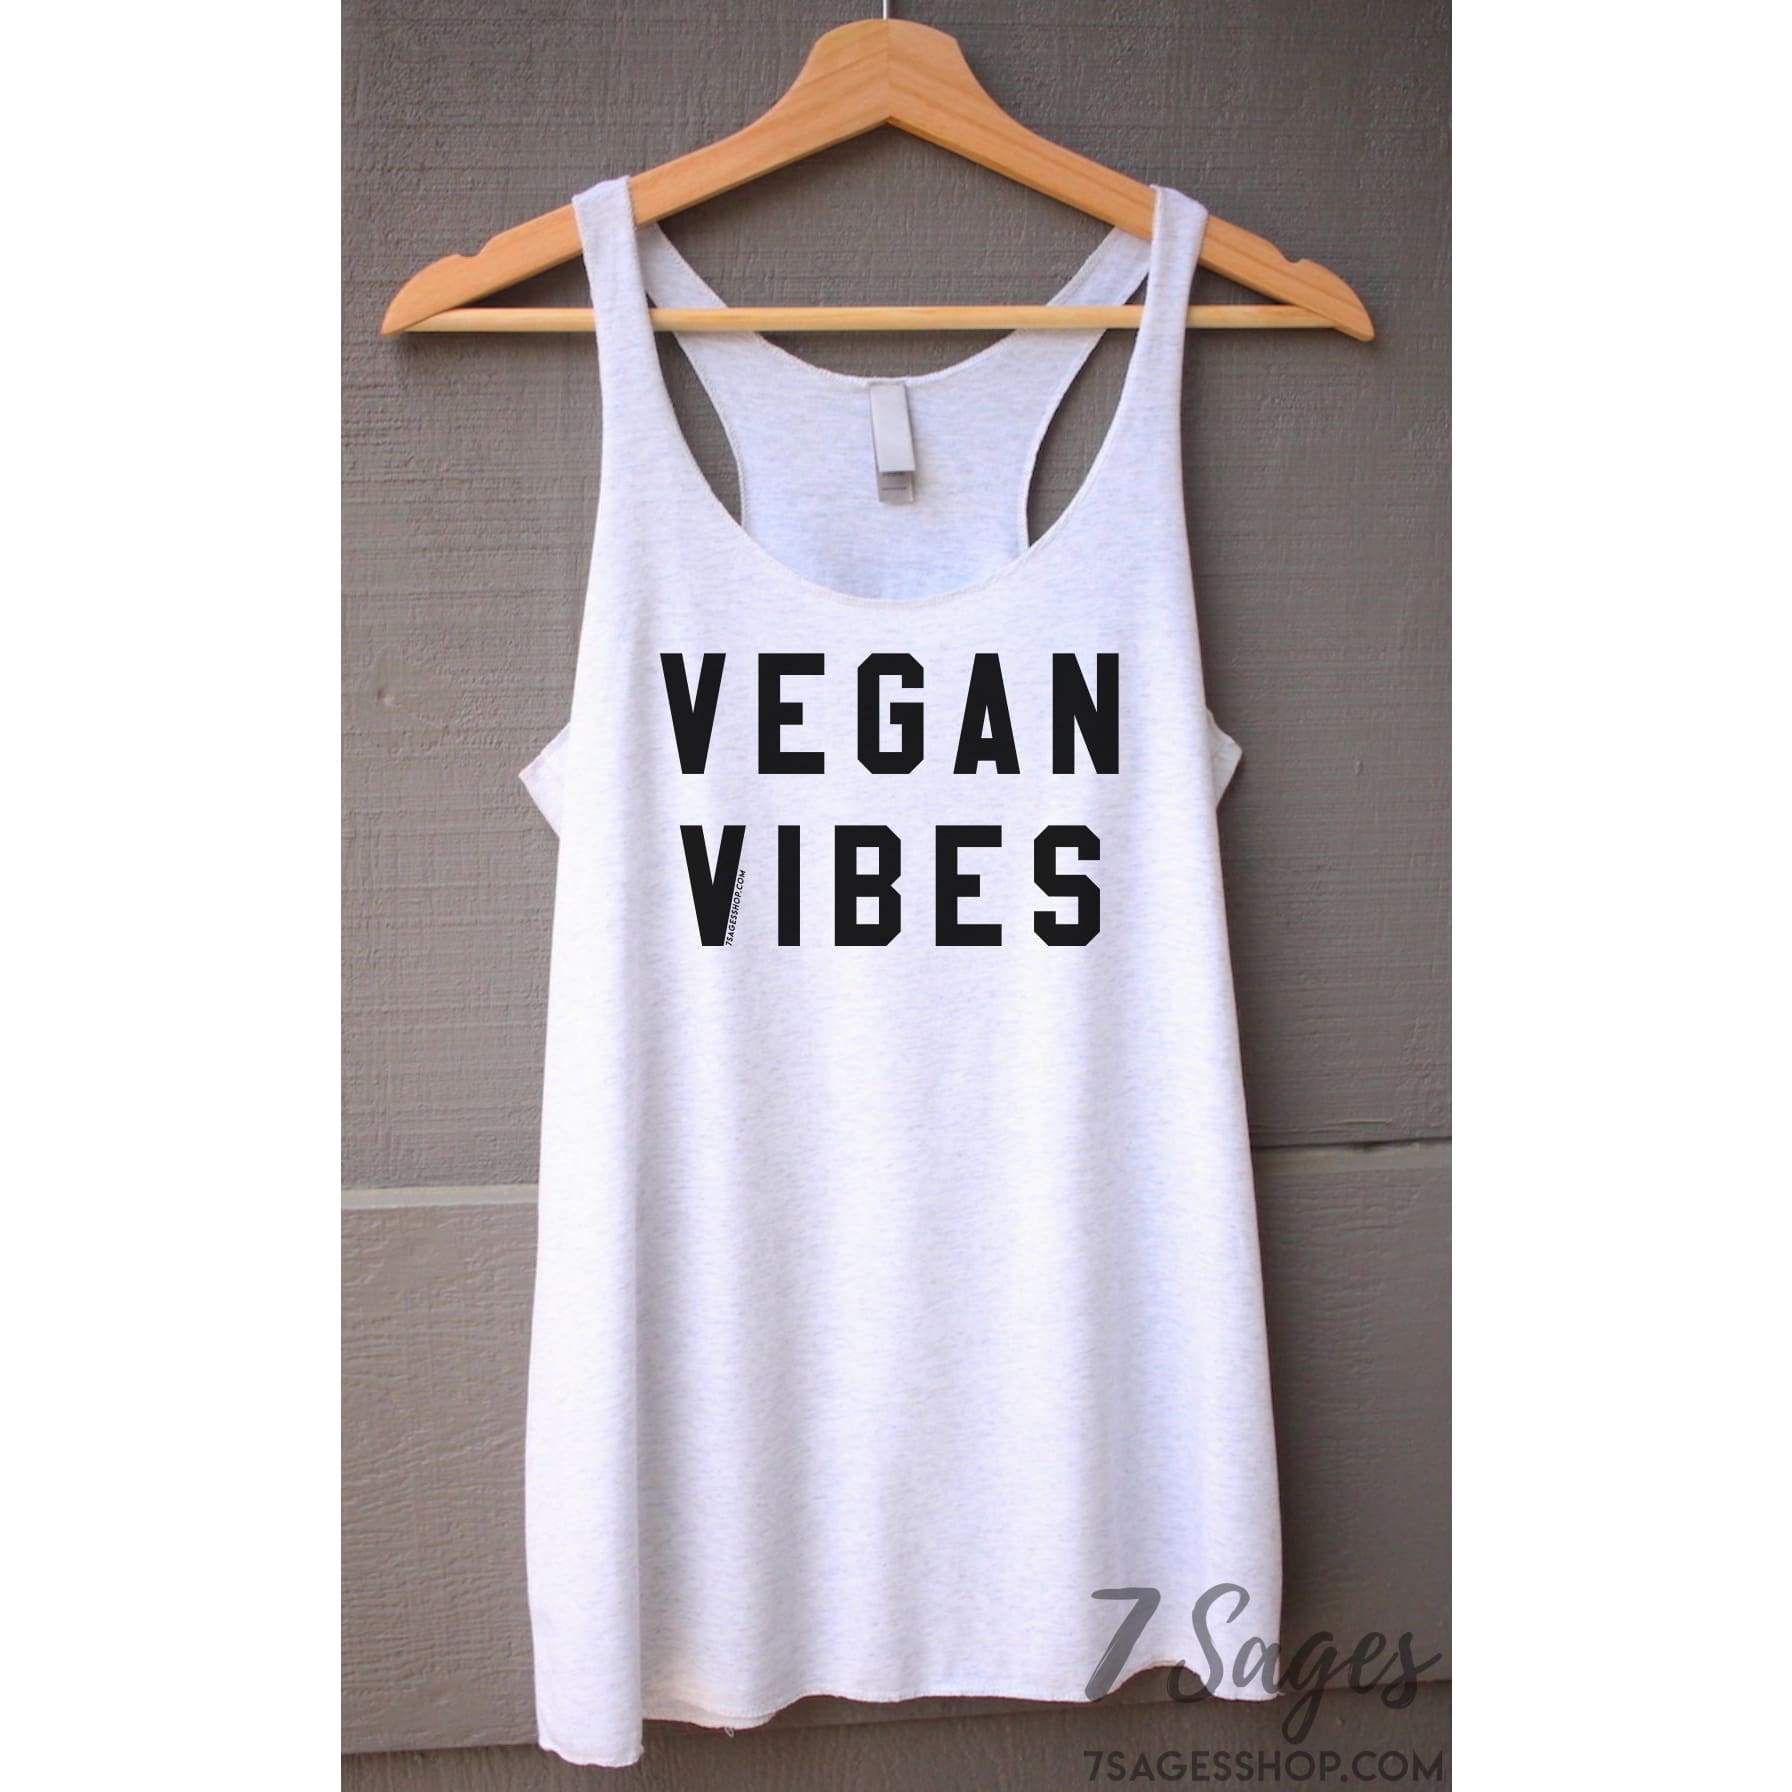 Vegan Vibes Tank Top - Vegan Tank Top - Vegan Shirt - Vegan Vibes - Vegan Gift - Vegan Vibes Clothing